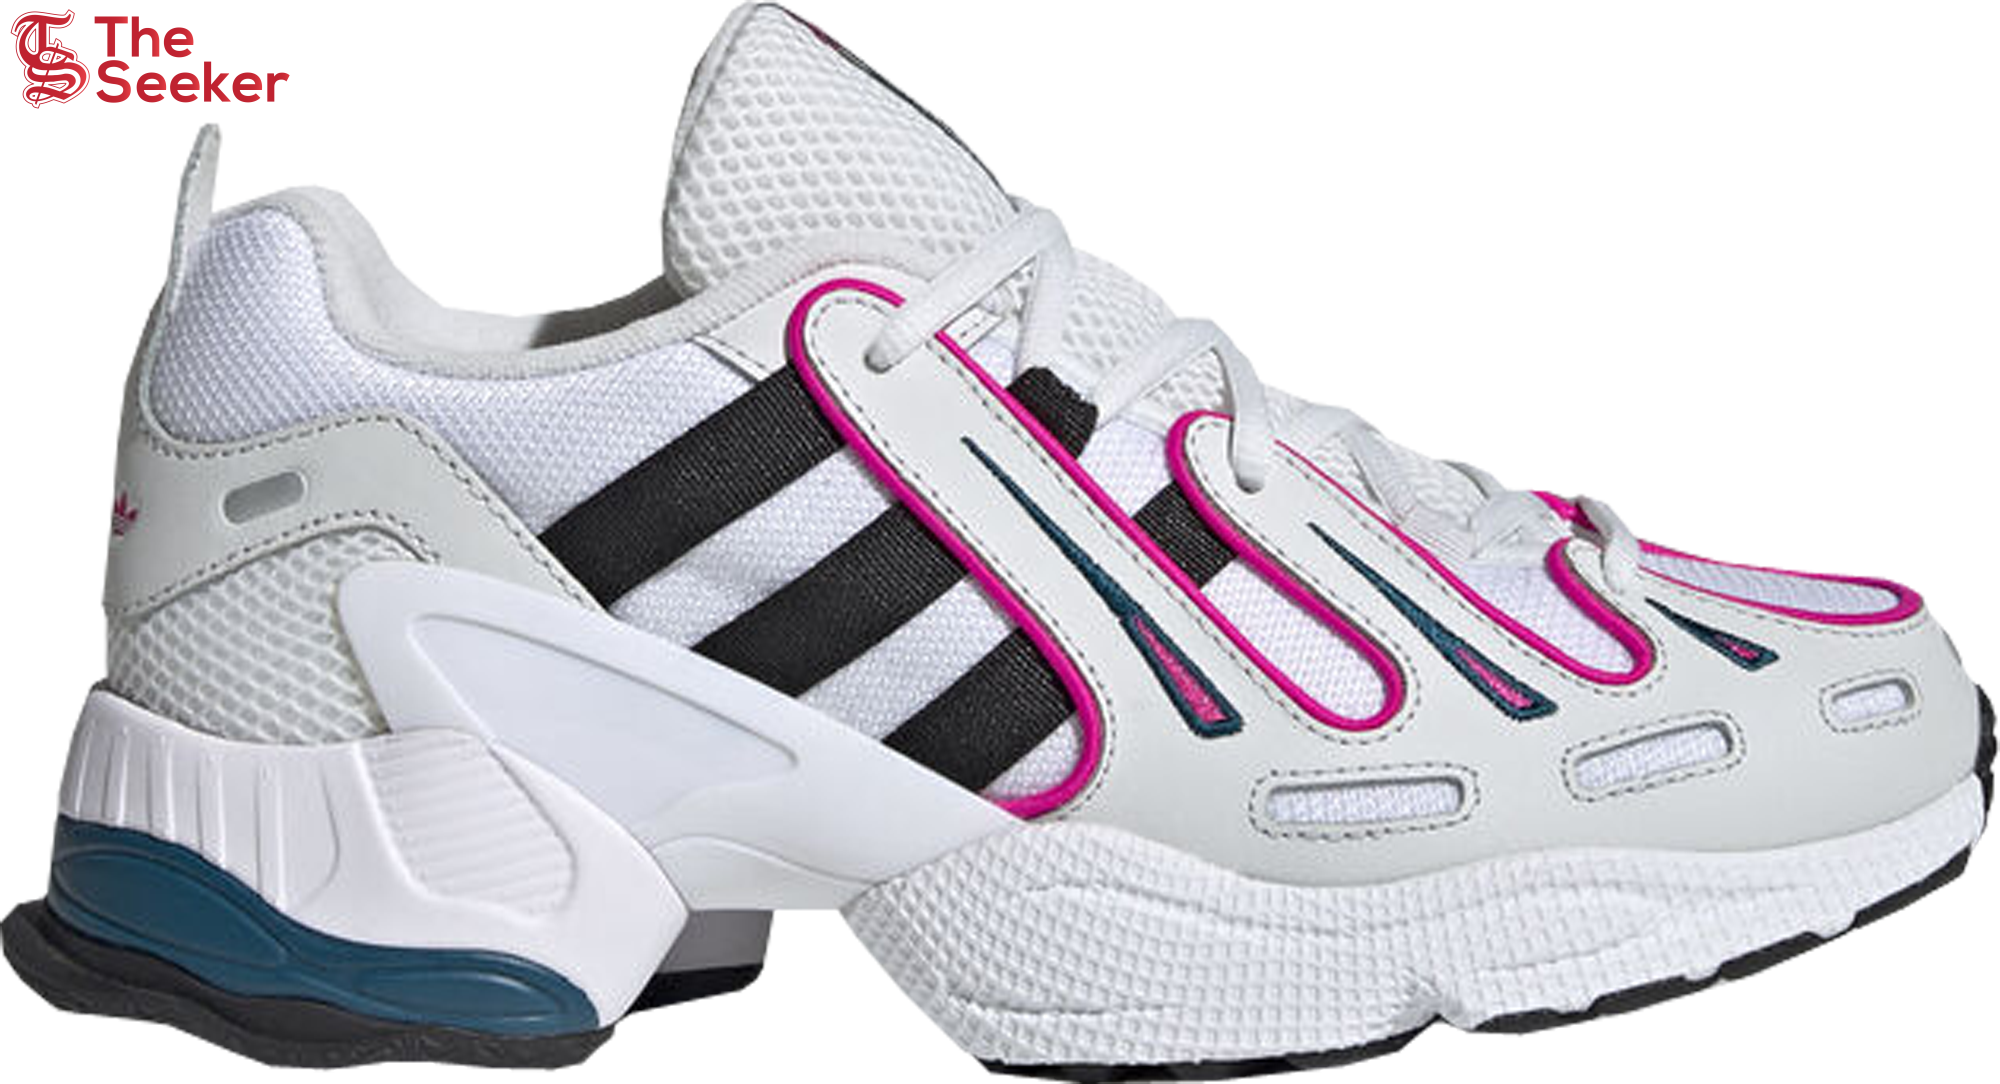 adidas EQT Gazelle Crystal White Shock Pink (Women's)